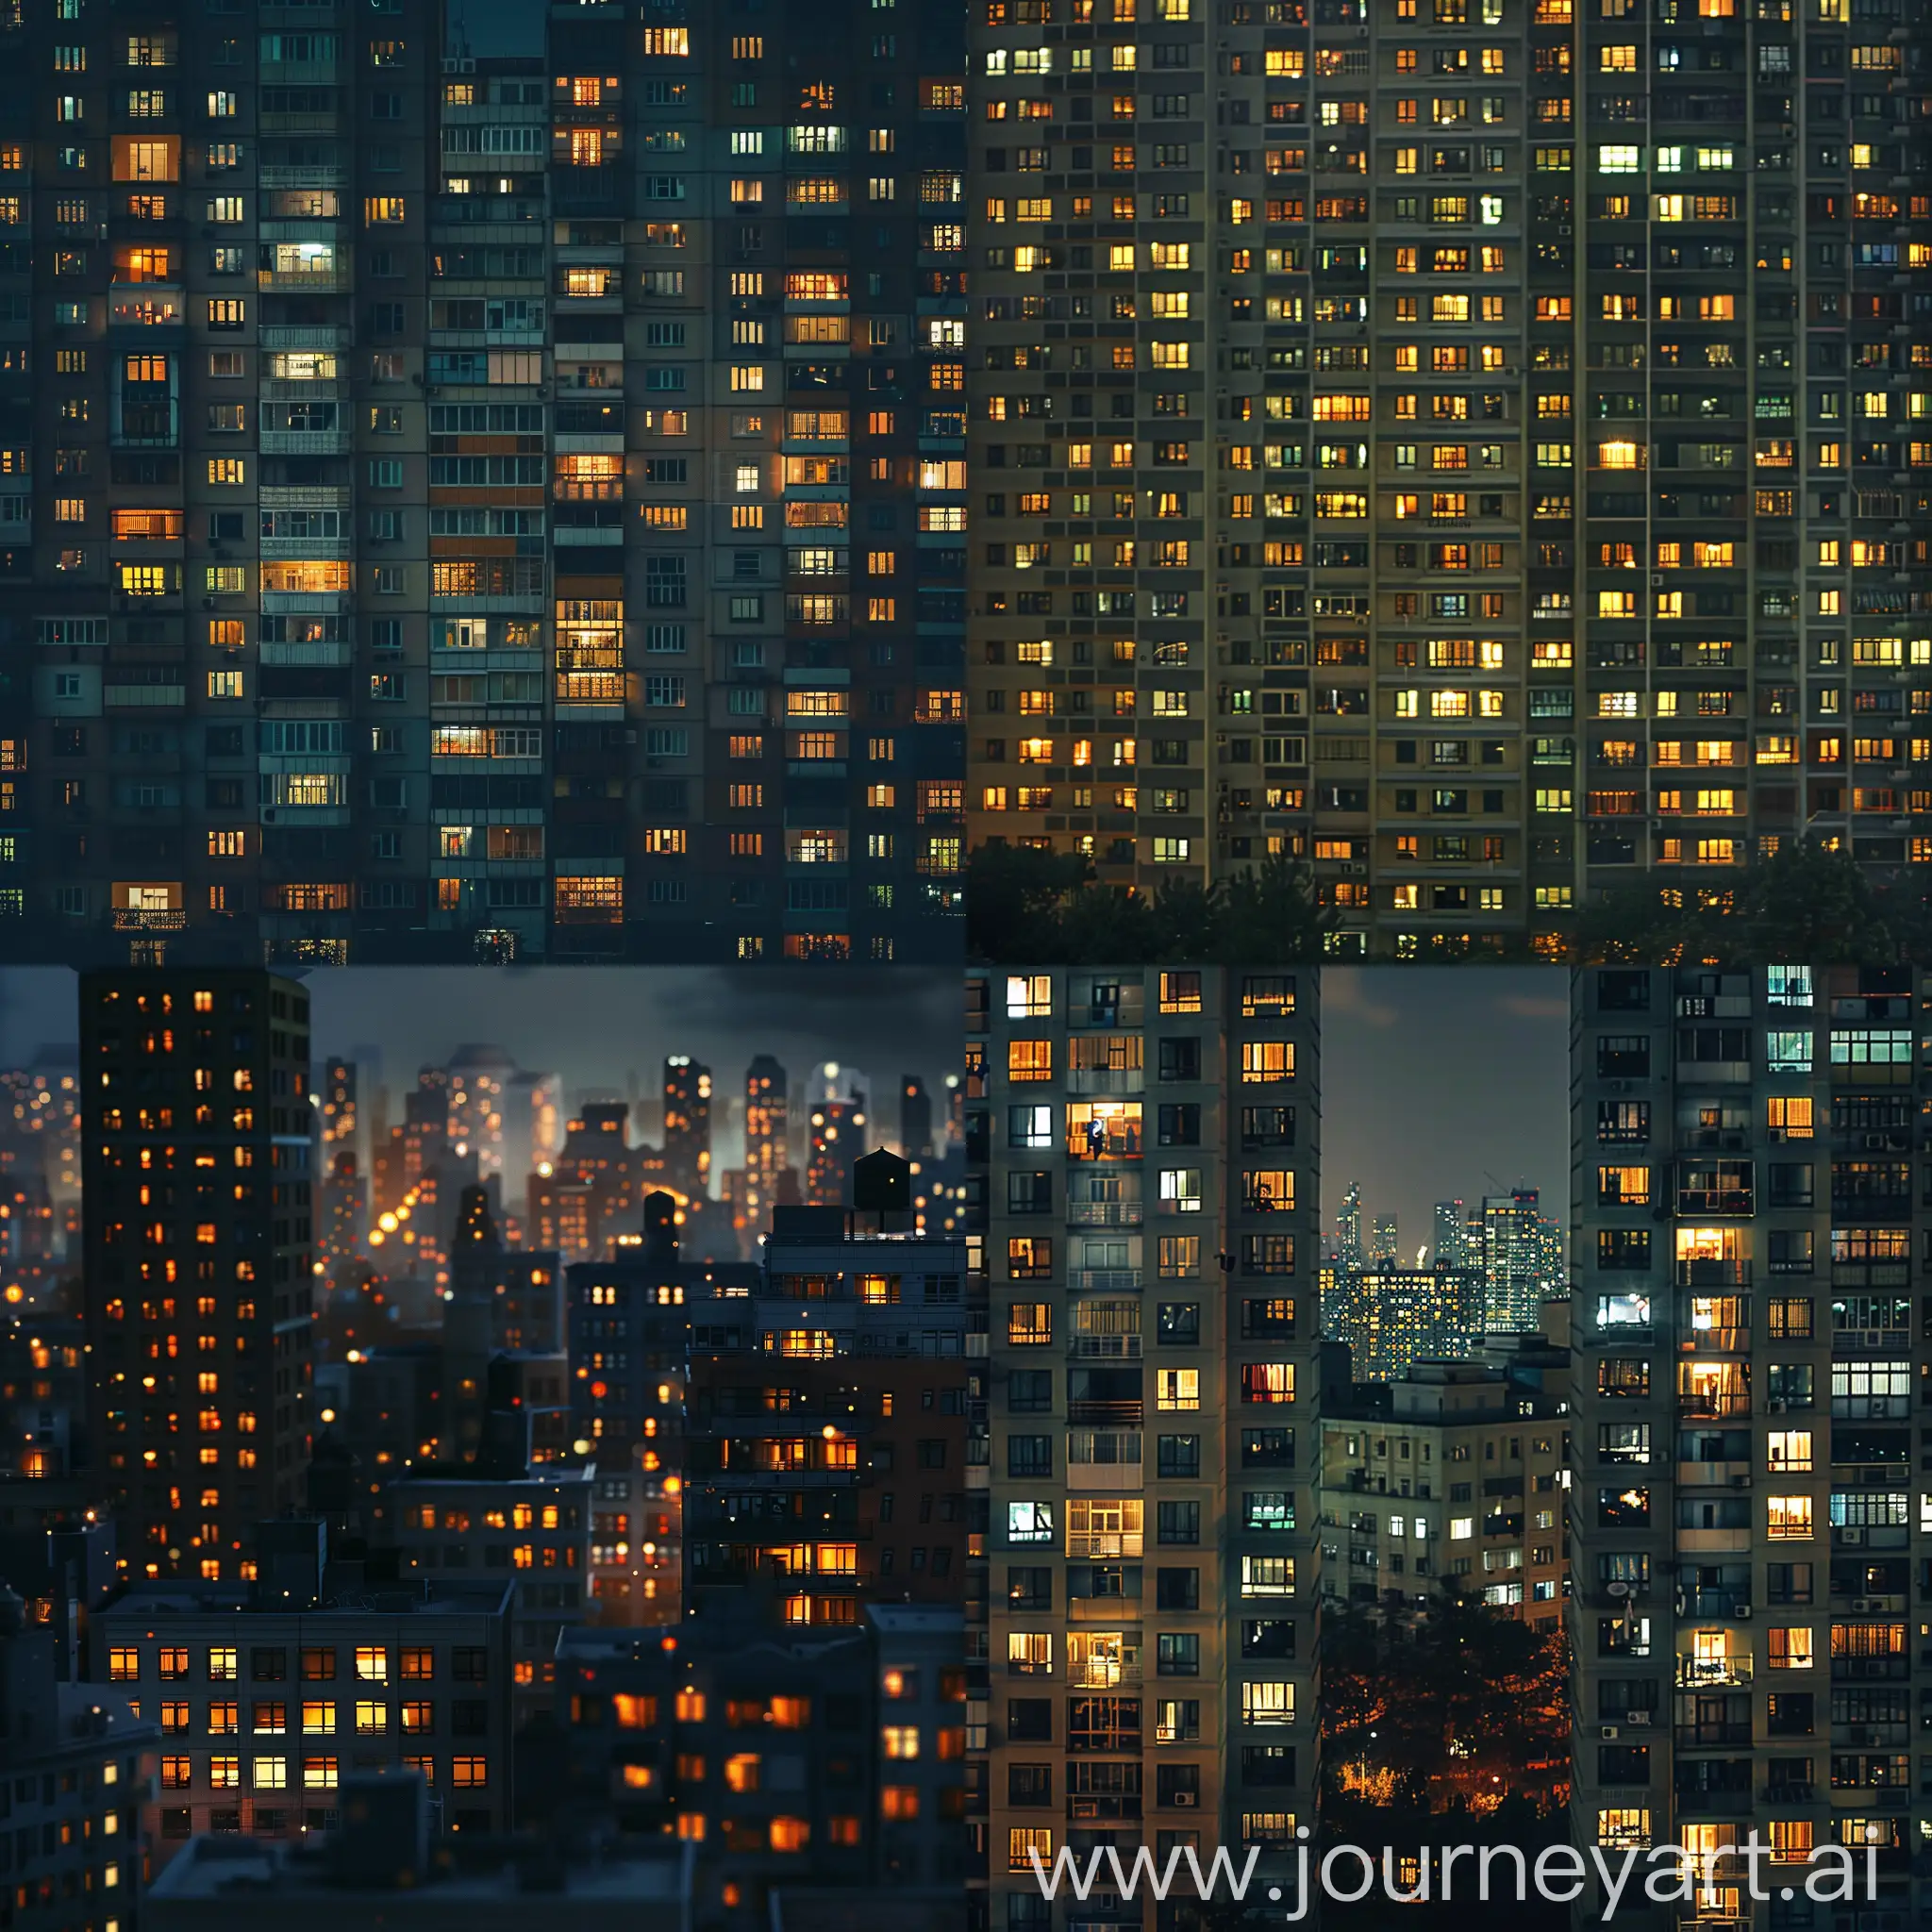 Urban-Night-Scene-with-Illuminated-Multistory-Buildings